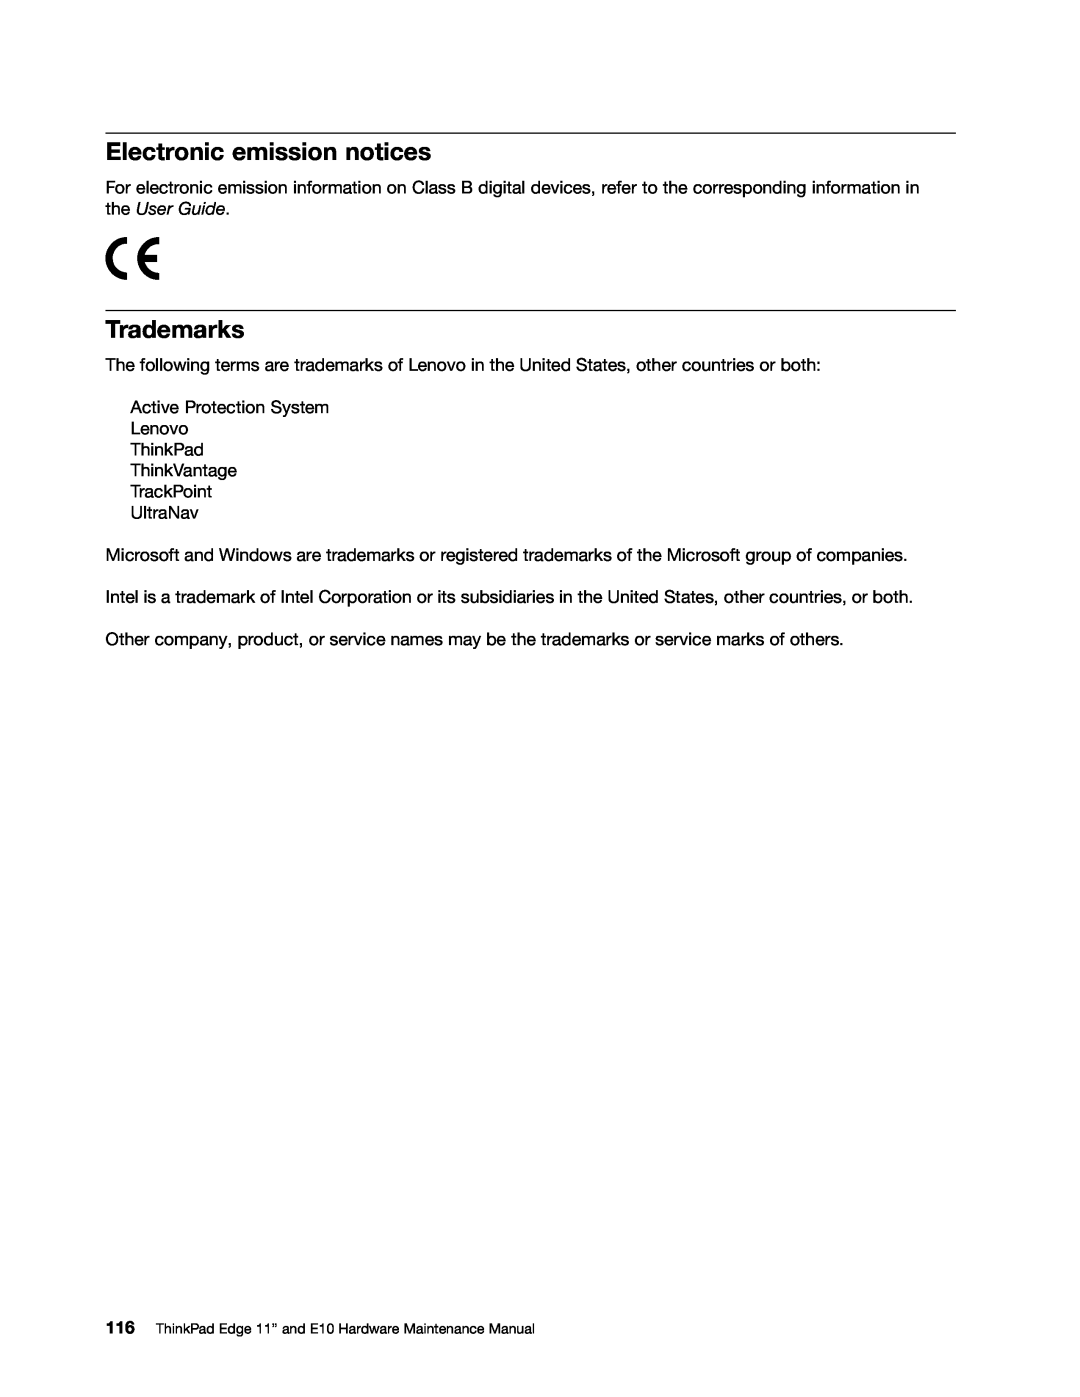 Lenovo E10 manual Electronic emission notices, Trademarks 